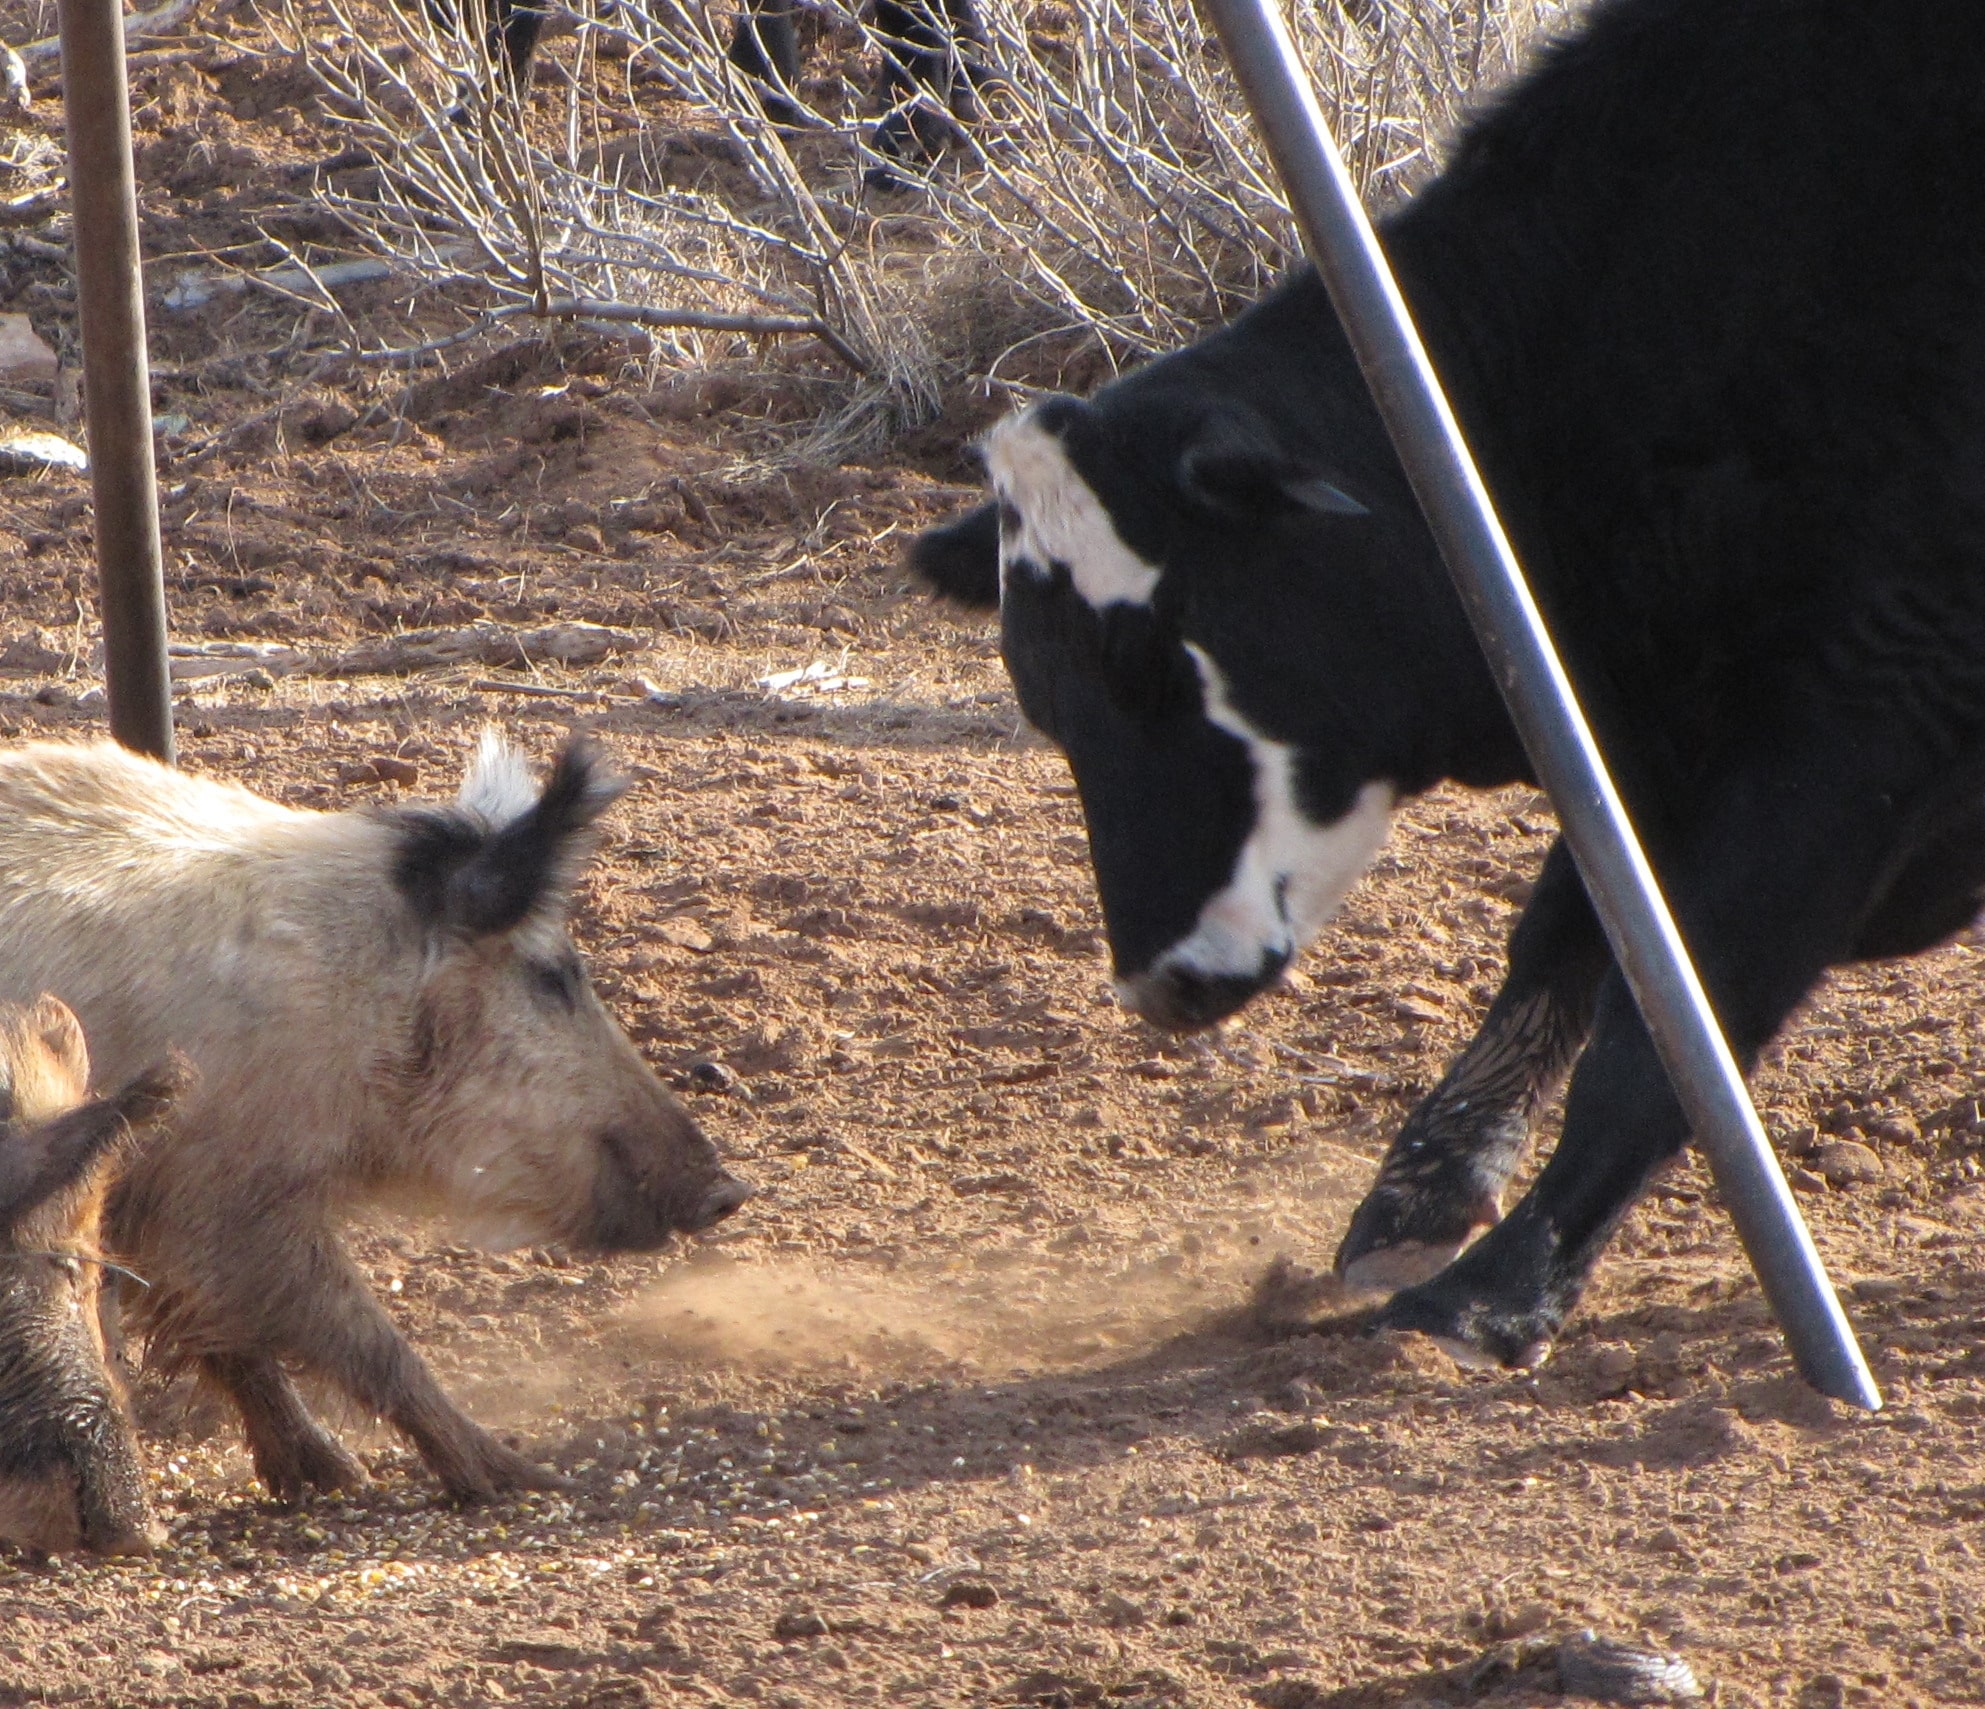 Feral swine and livestock